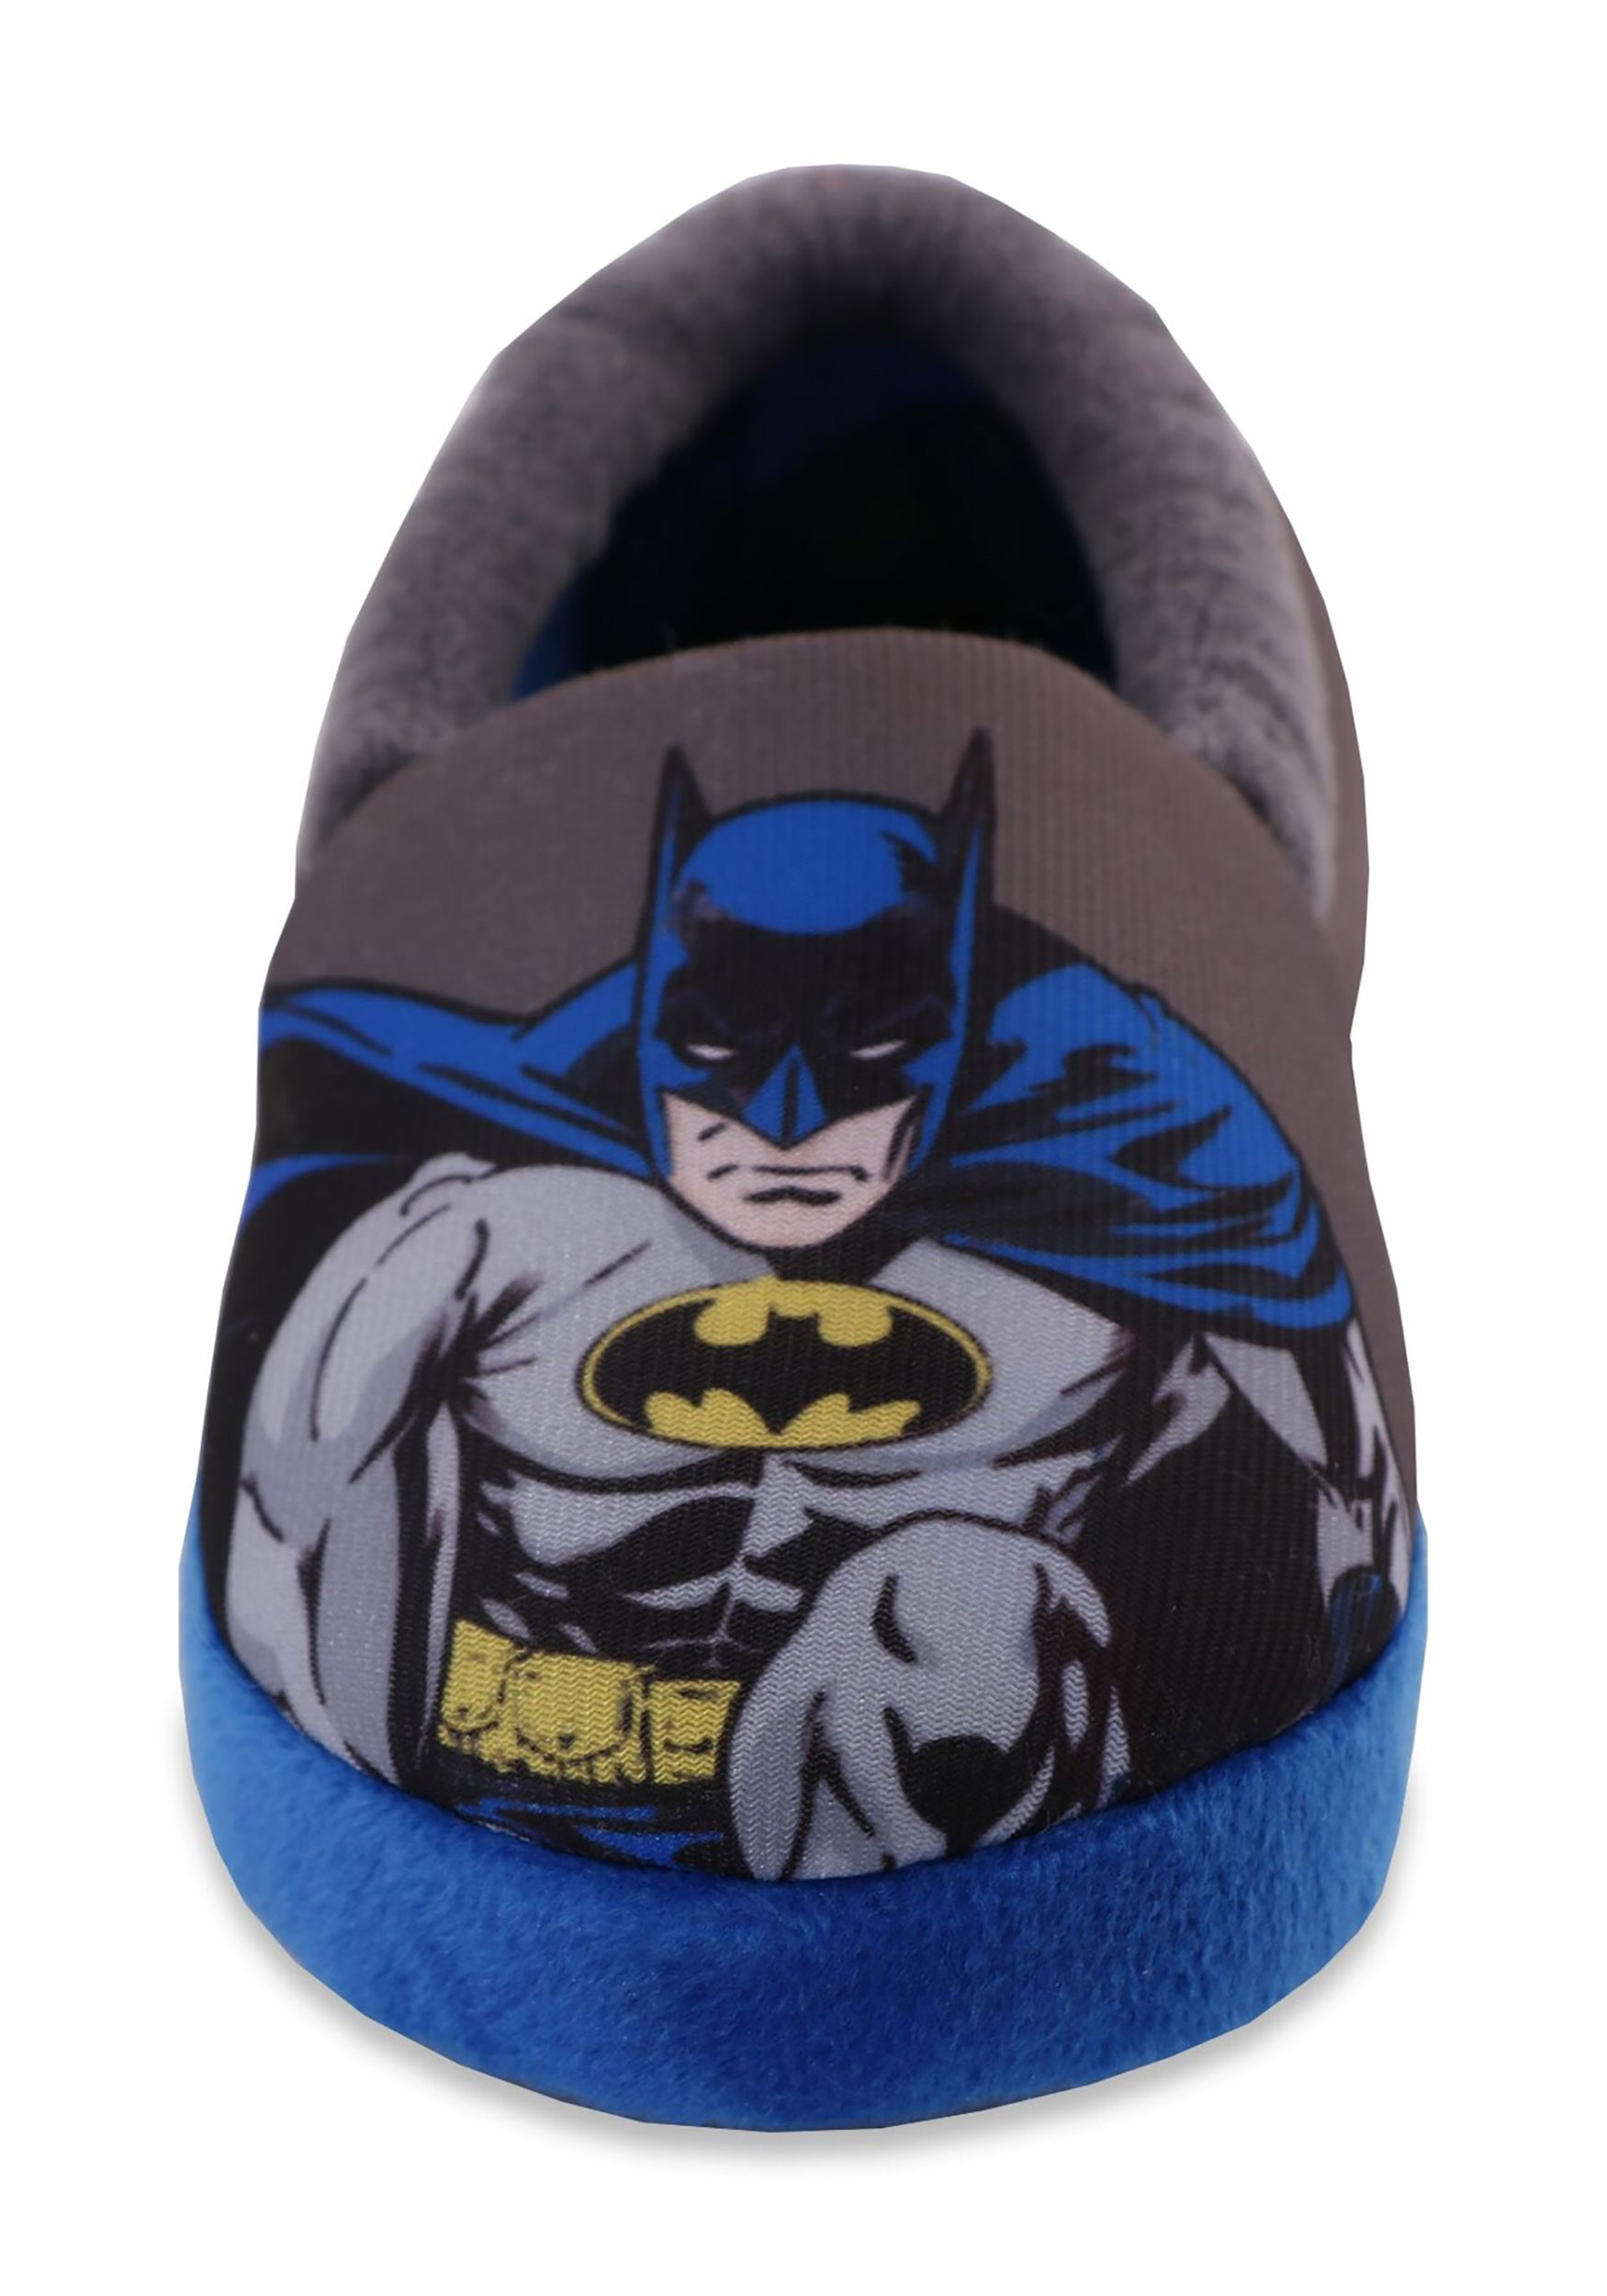 batman slip on shoes